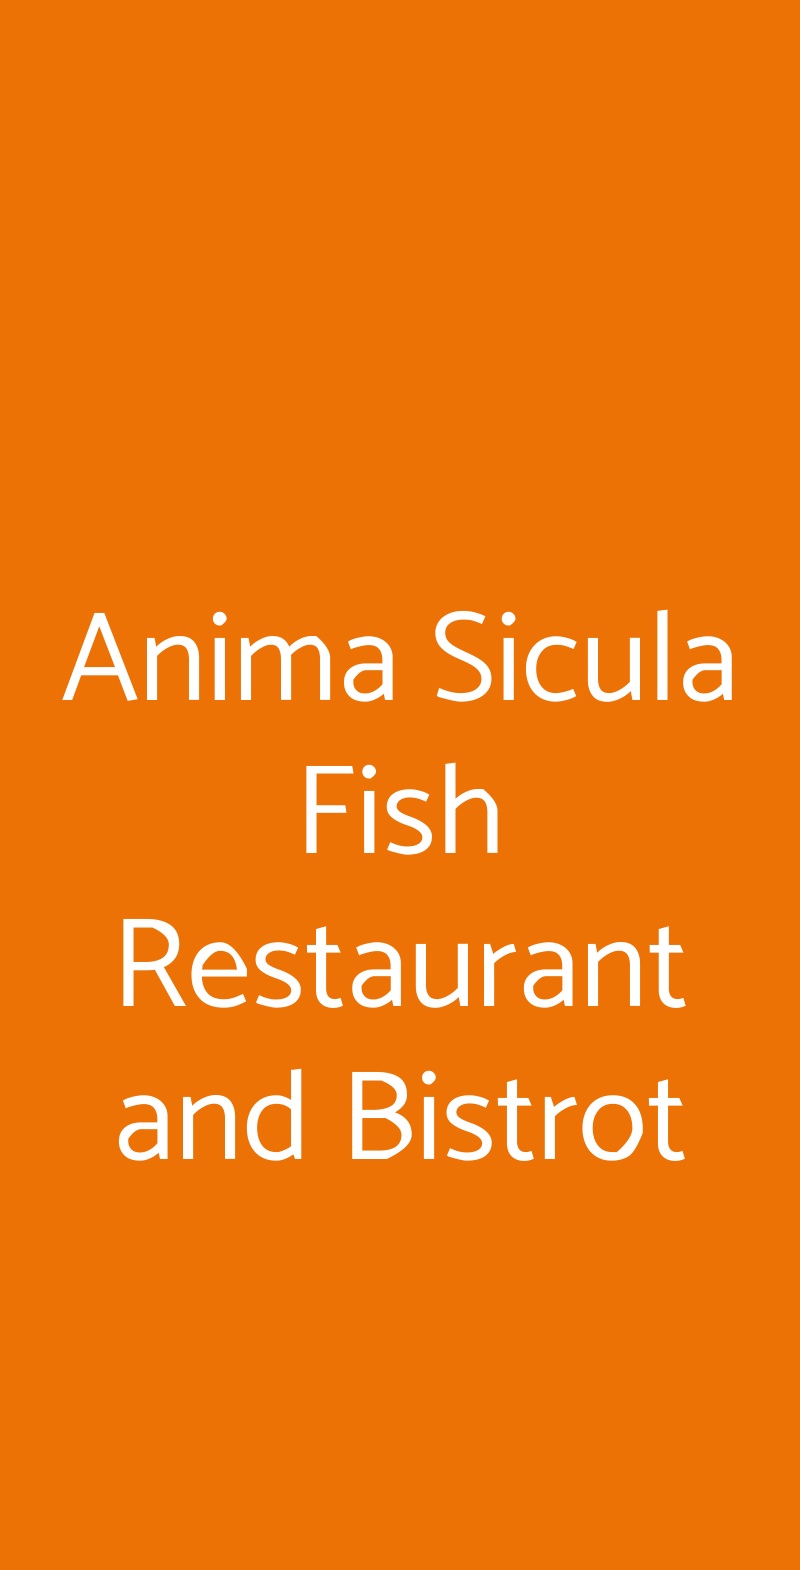 Anima Sicula Fish Restaurant and Bistrot Siracusa menù 1 pagina